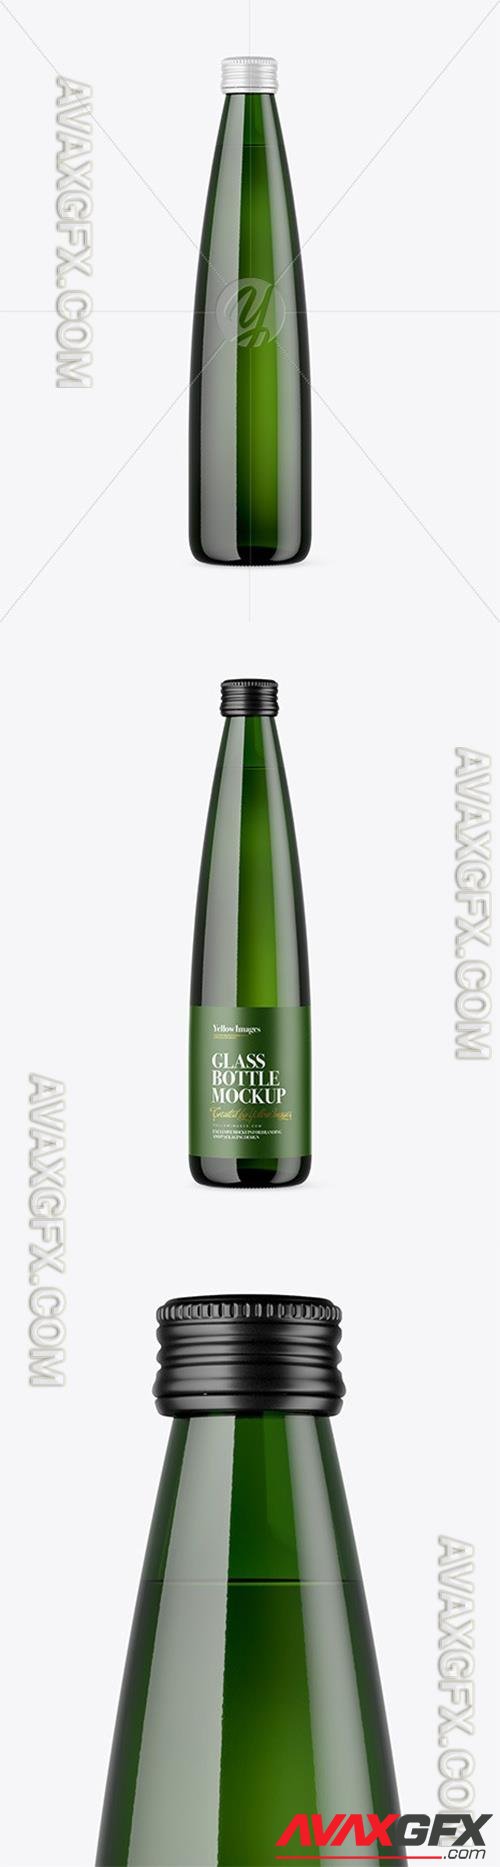 Green Glass Bottle Mockup 48096 TIF